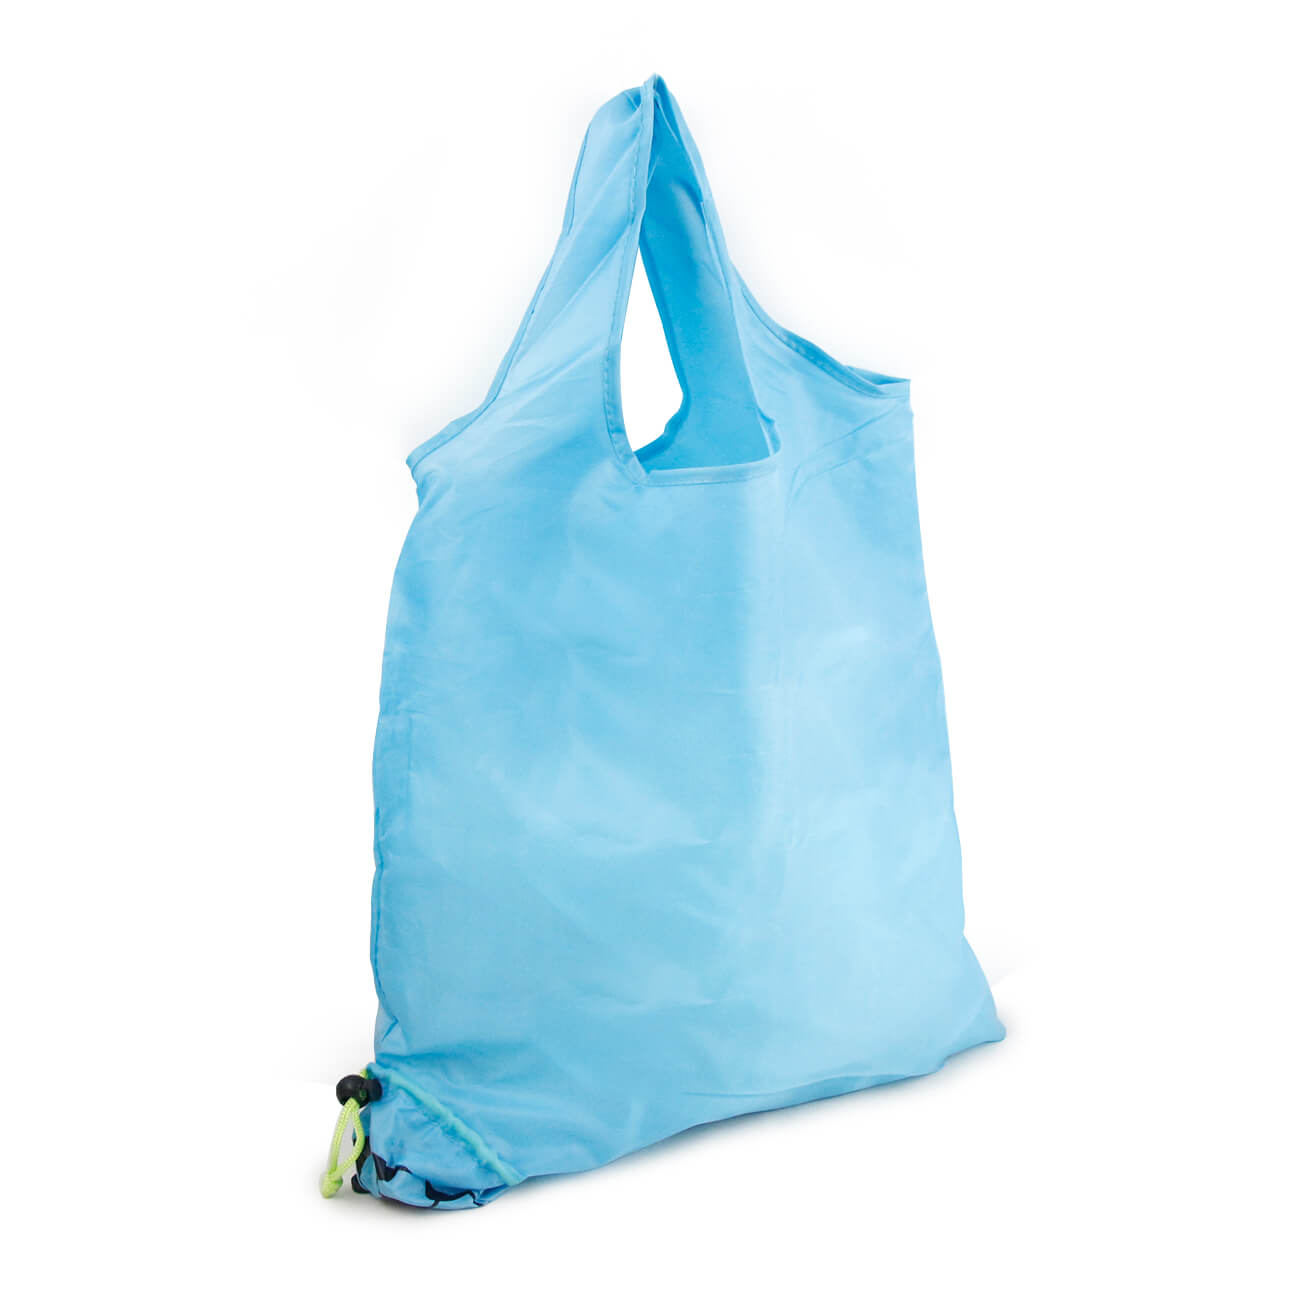 Foldable football shopping bag